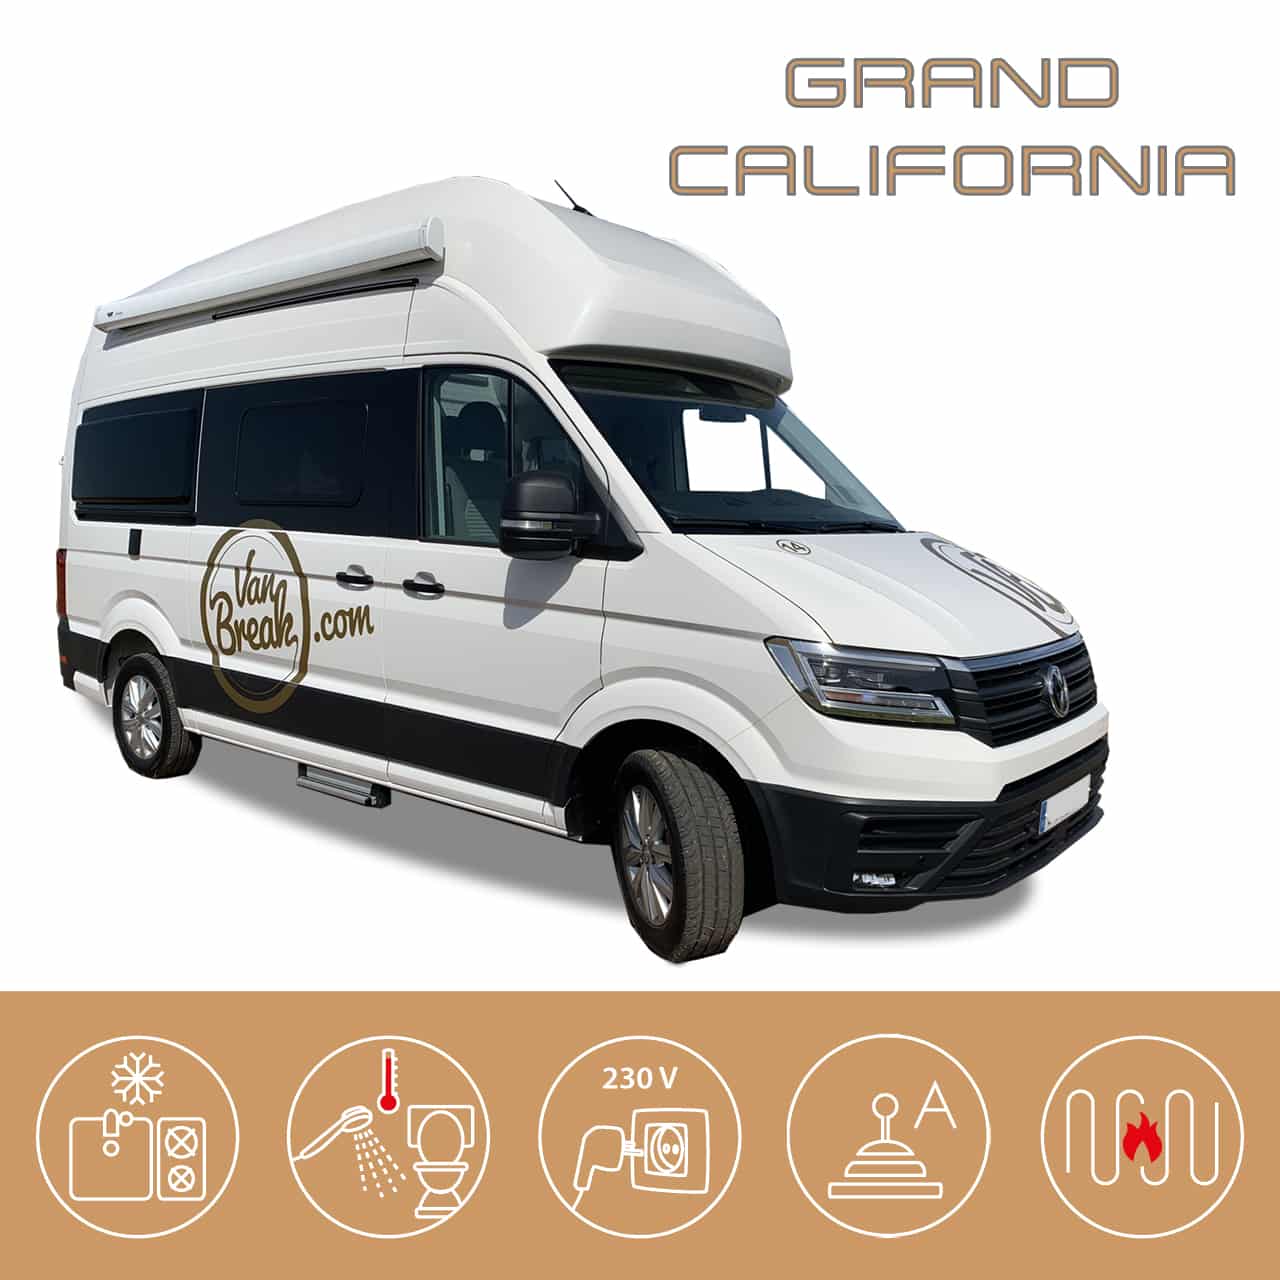 Volkswagen Grand California - hire vanbreak malaga